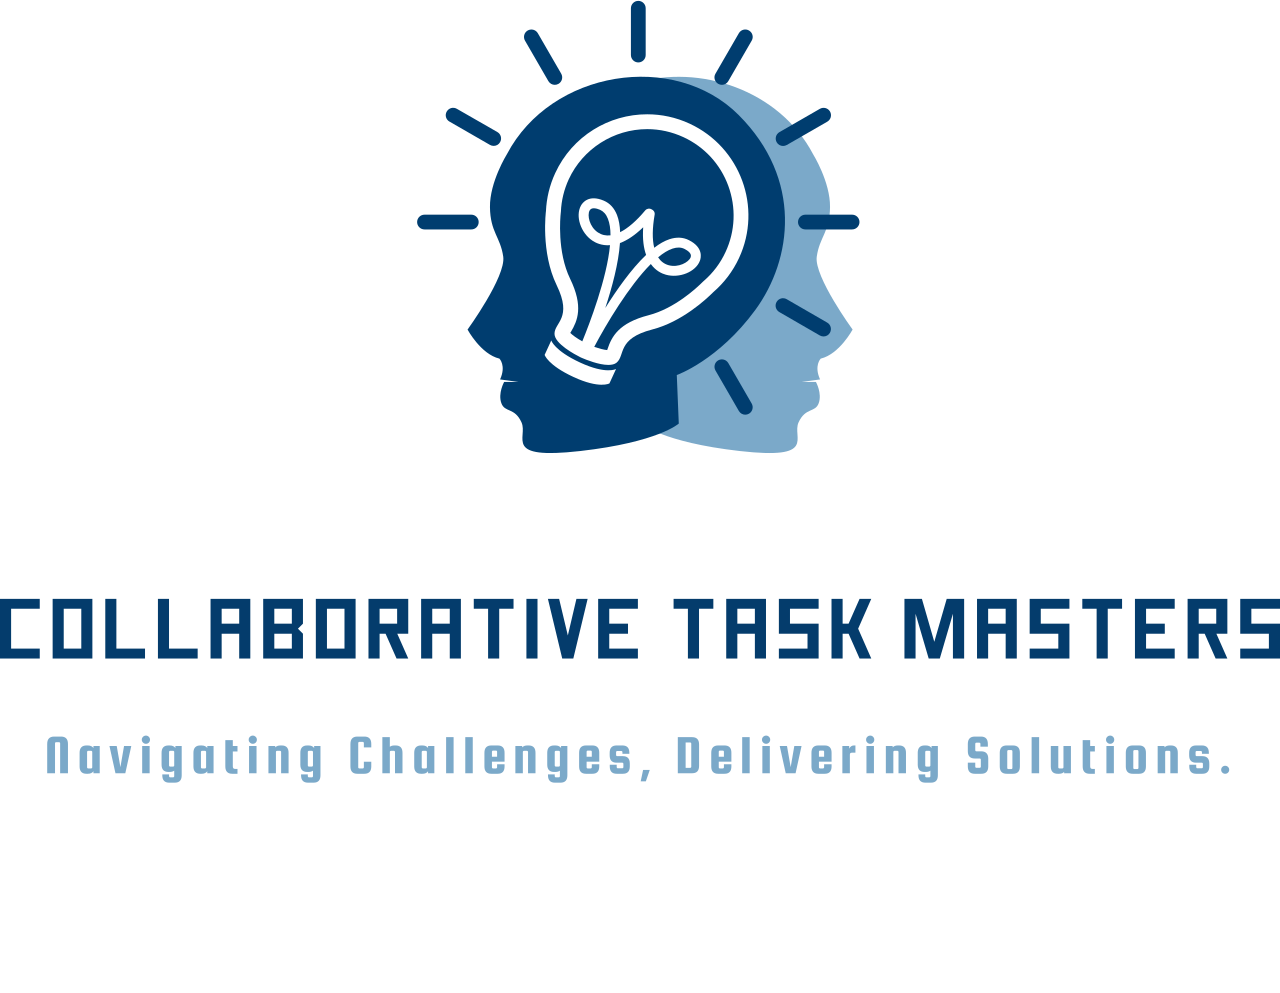 Collaborative Task Masters's logo